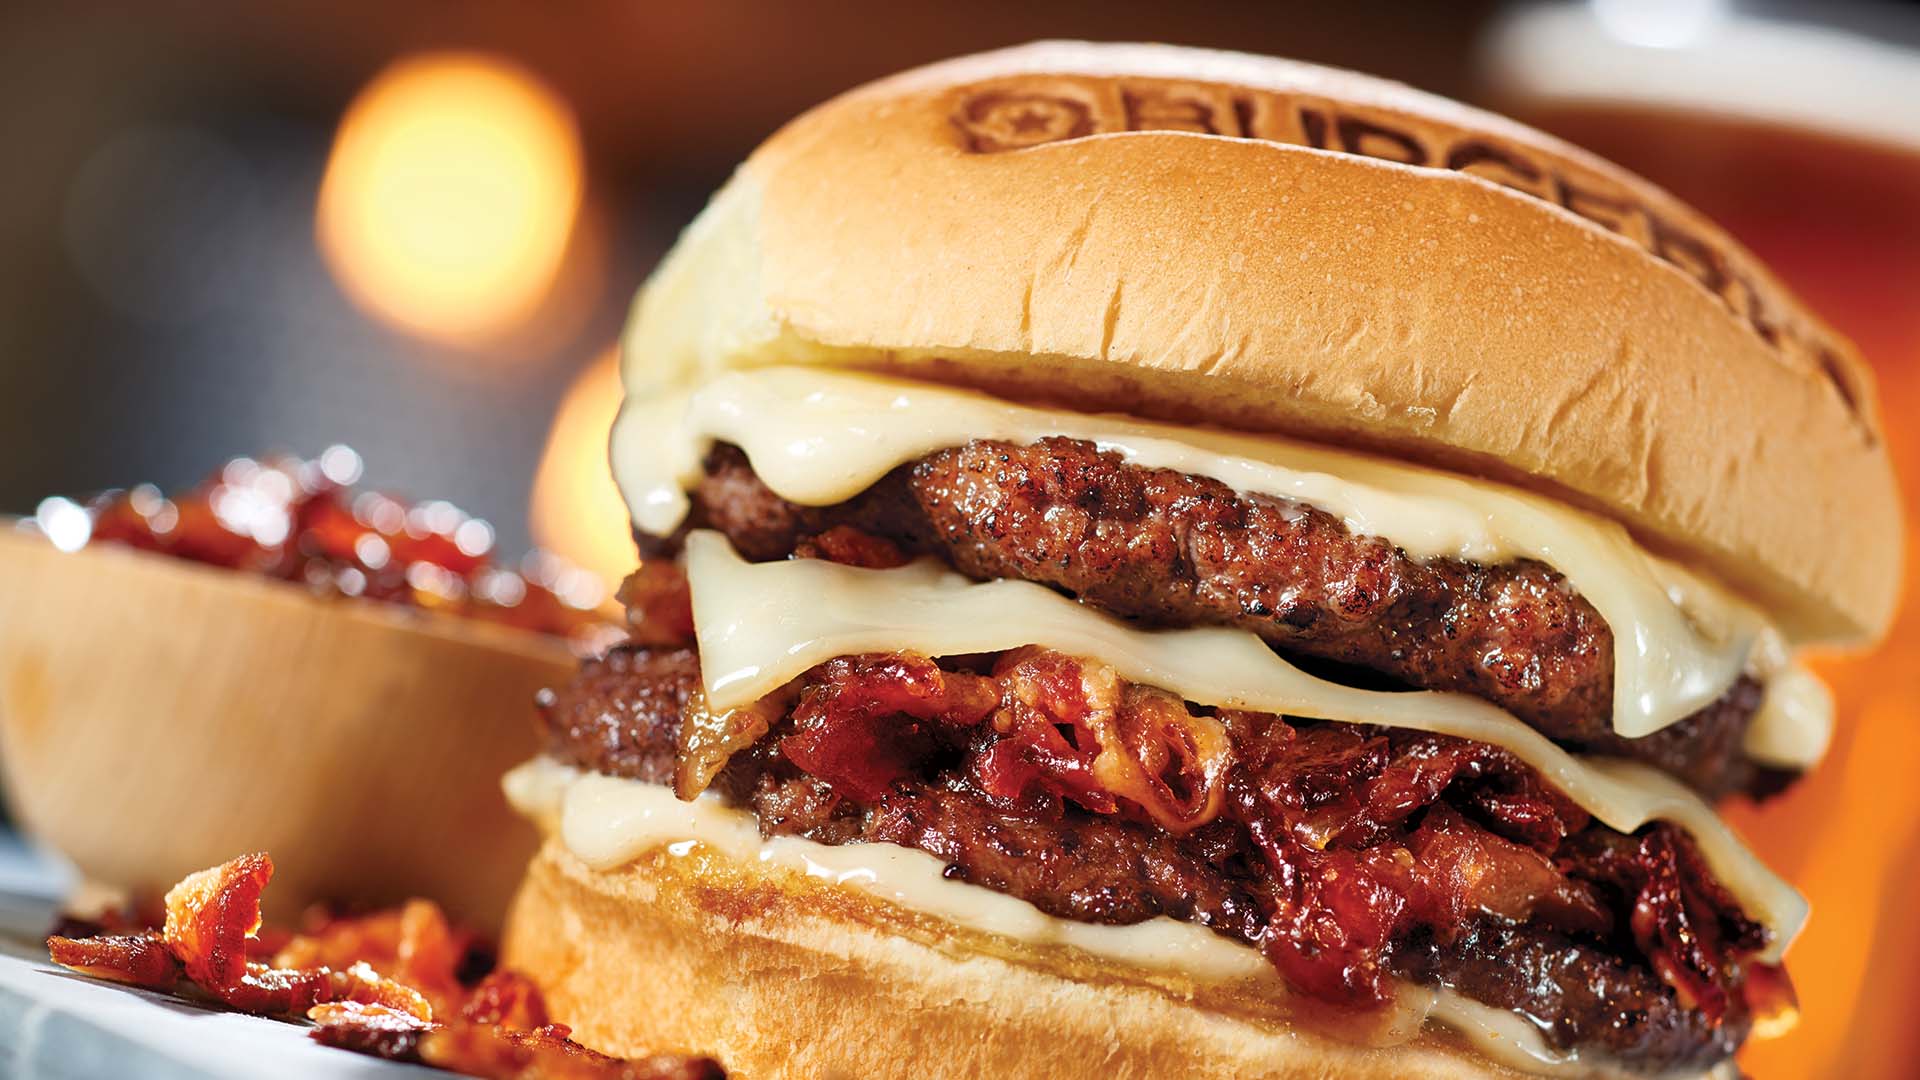 The CEO bacon double cheeseburger from BurgerFI